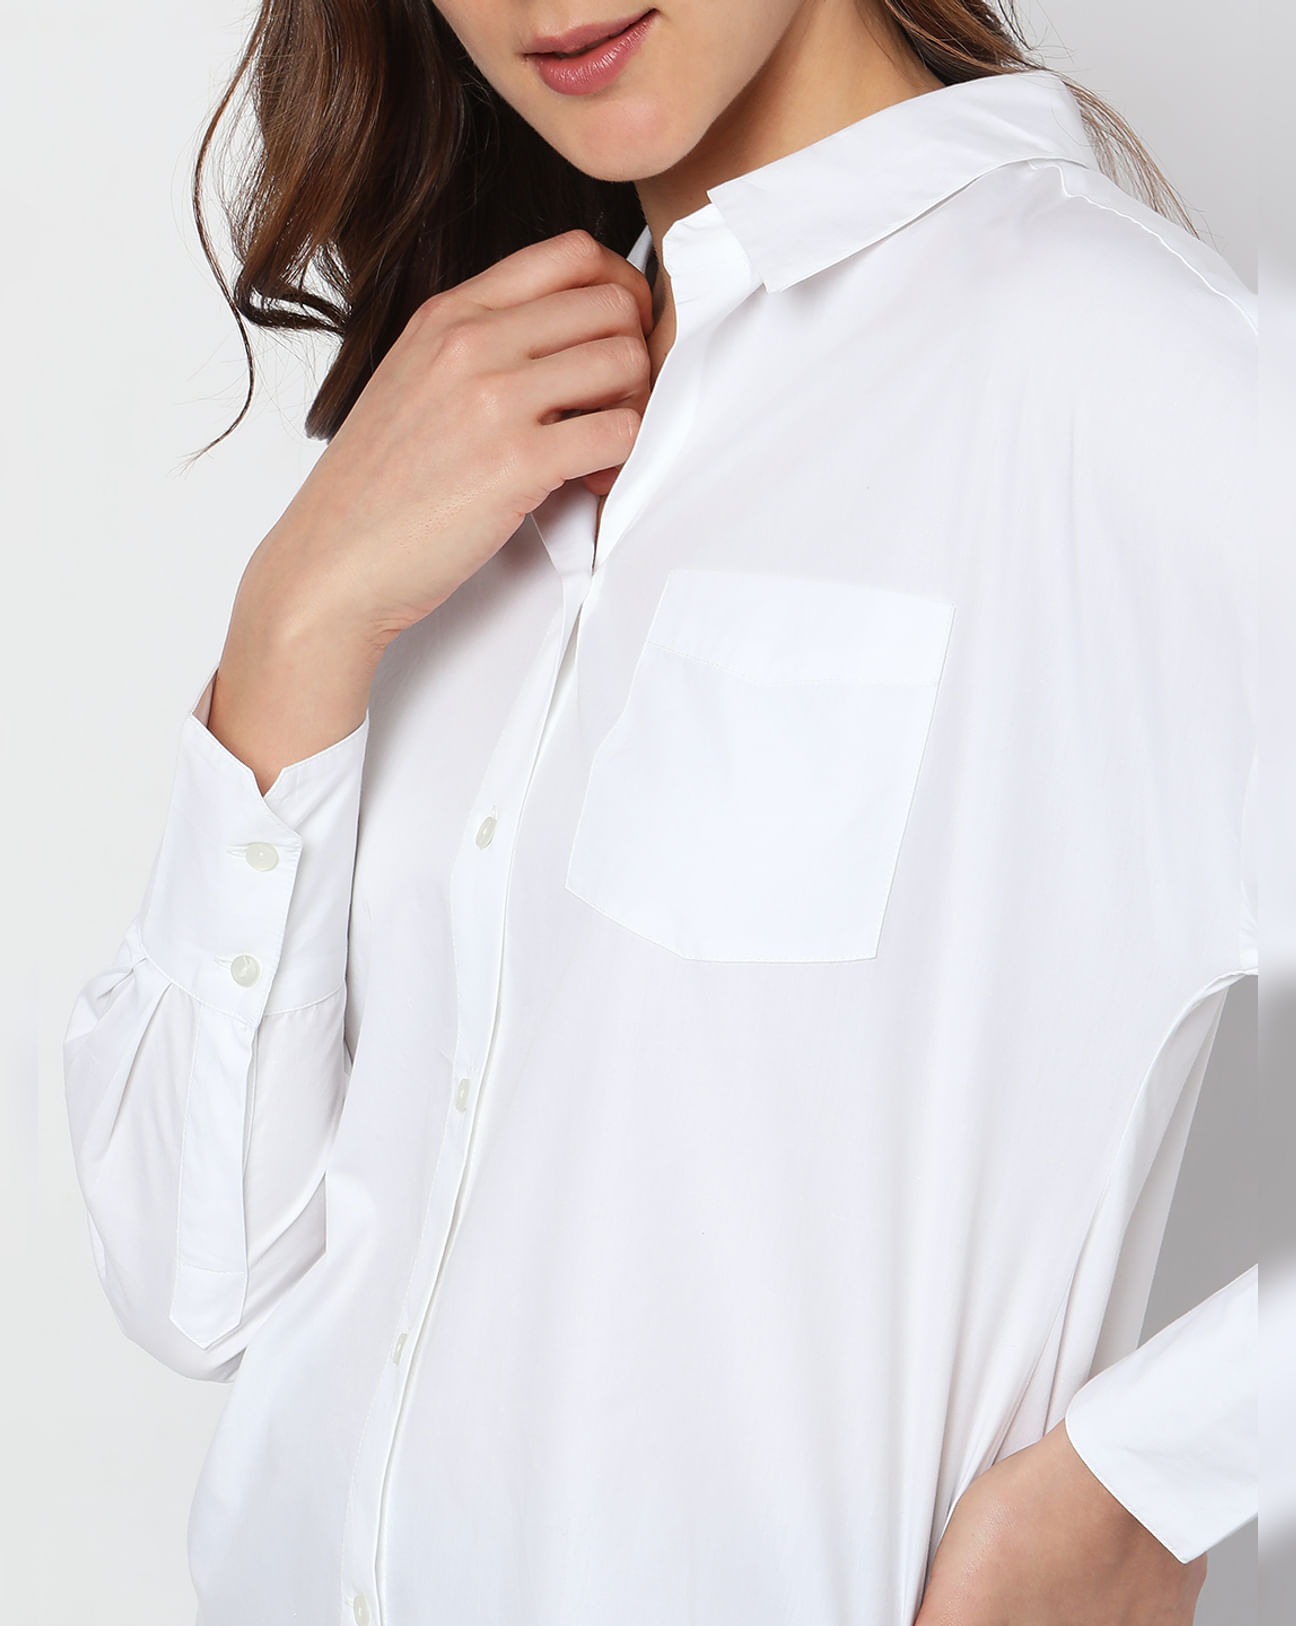 Buy White Formal Shirt For Women Online in India